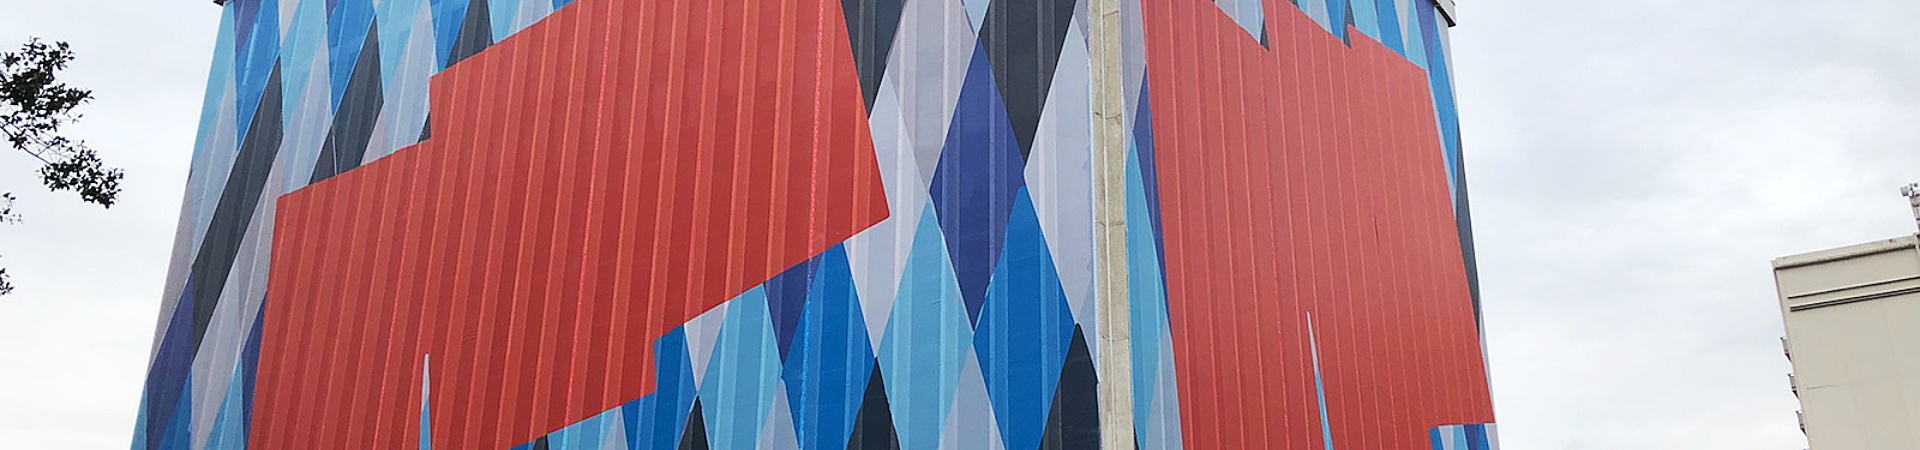 Colorful mesh building wrap surrounding an office building.